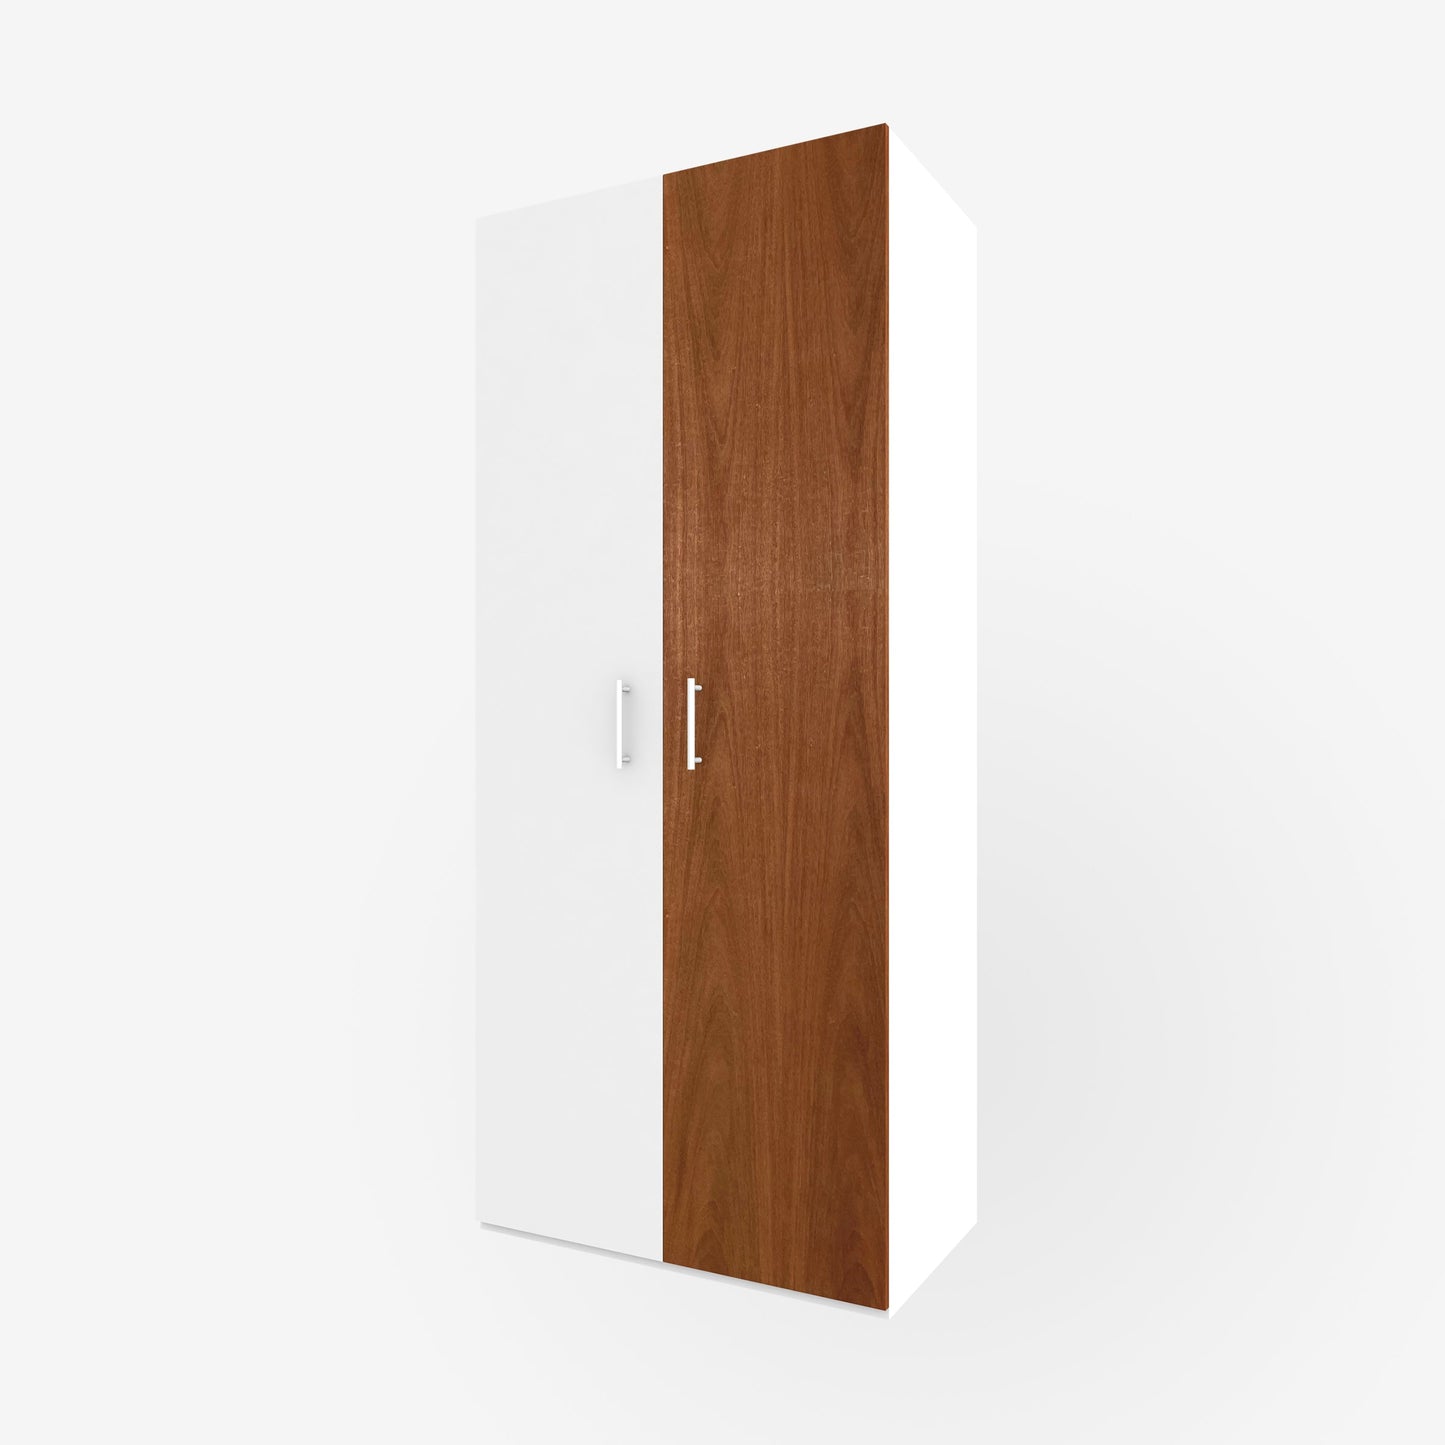 19.5" x 93" real wood veneer mahogany slab door for Ikea or Swedeboxx pax closet cabinet